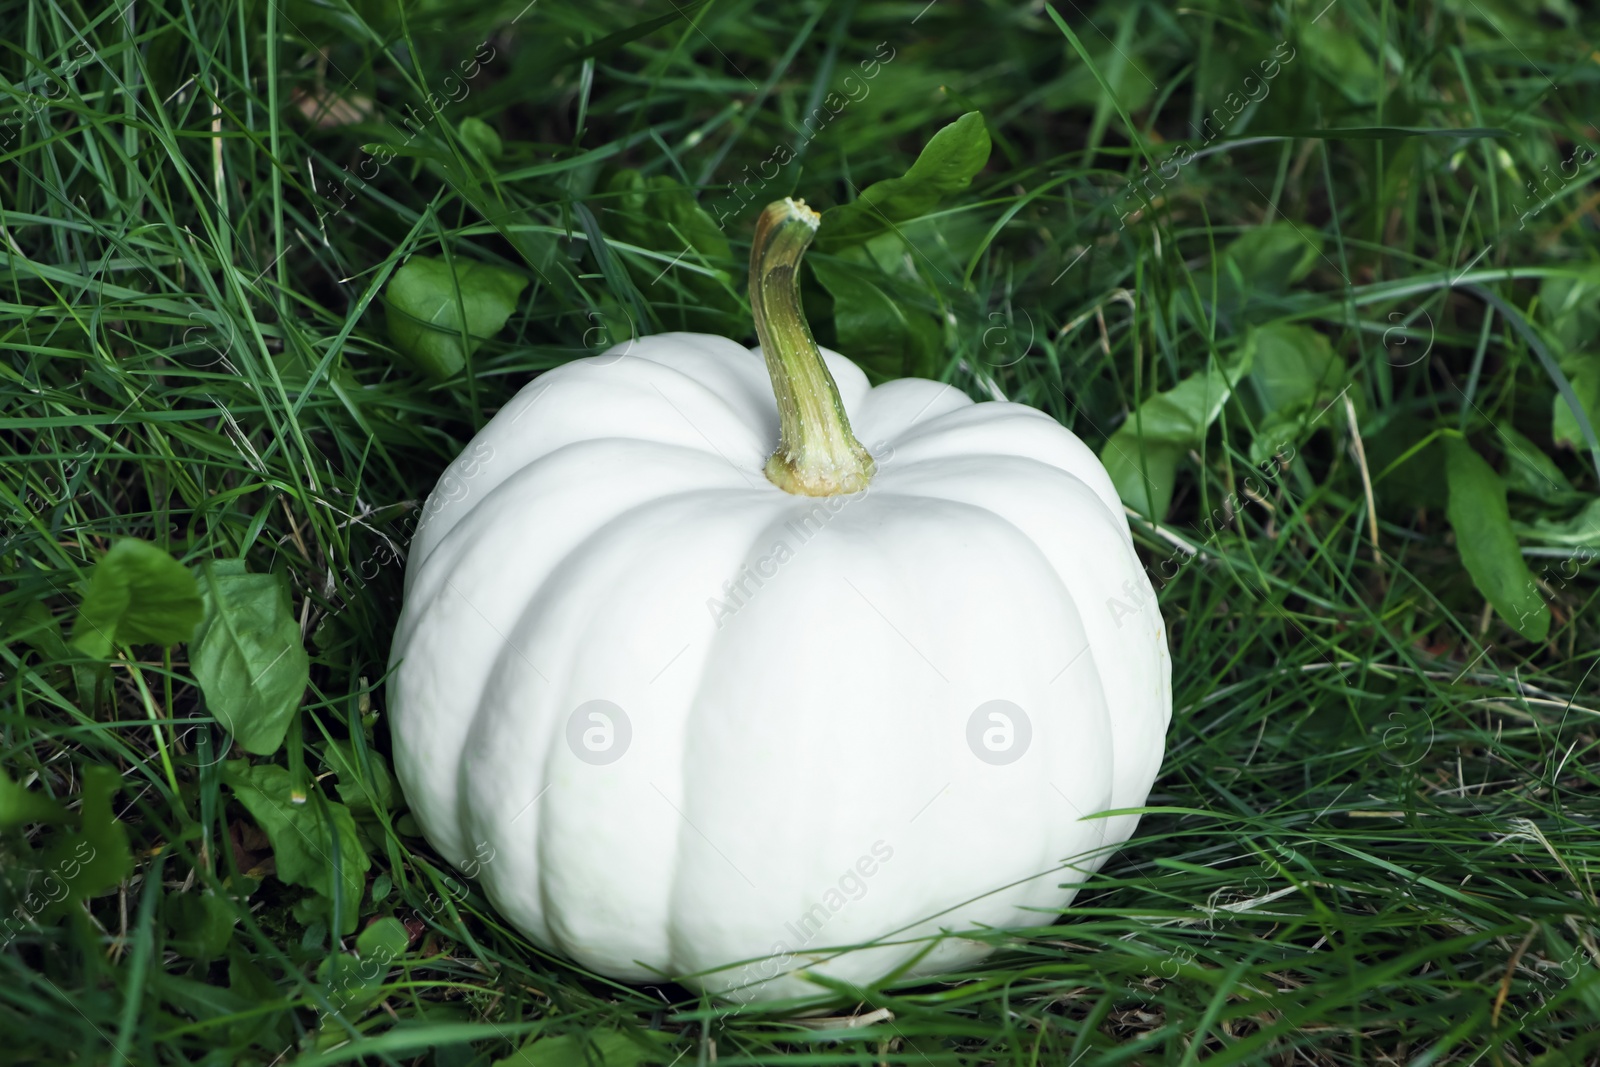 Photo of Whole white pumpkin among green grass outdoors